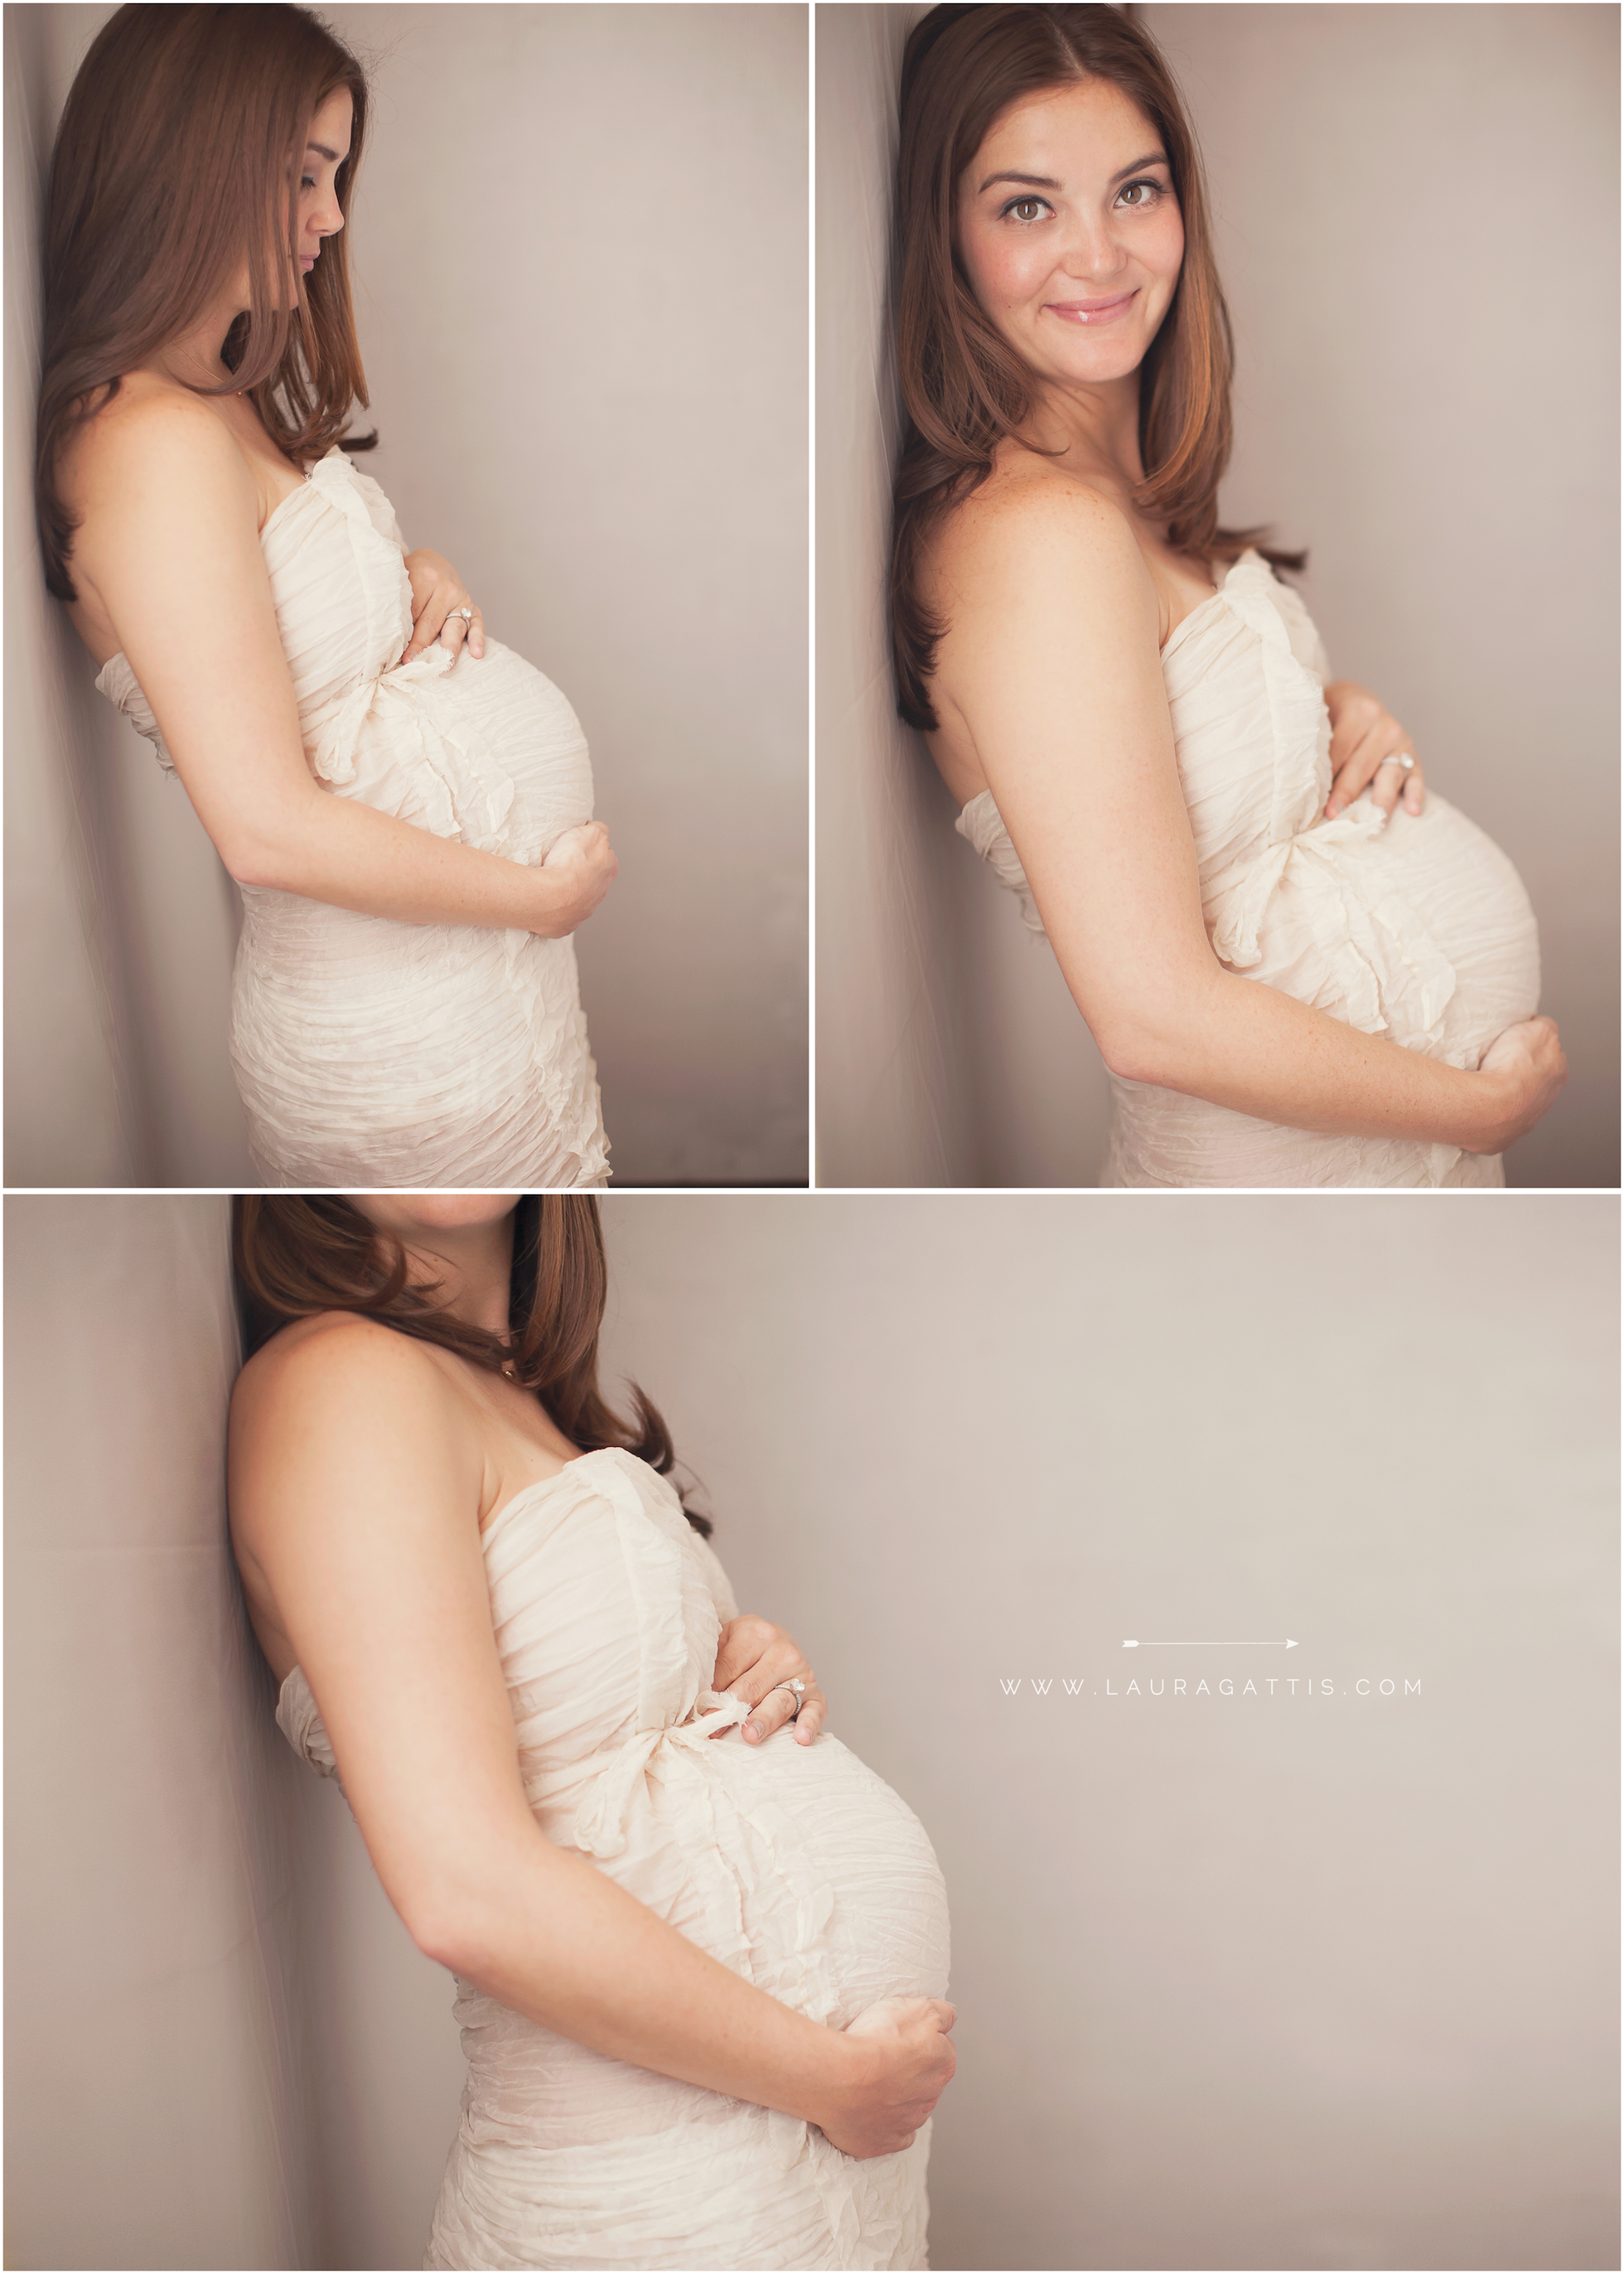 tampa maternity photographer | laura gattis photography | www.lauragattis.com